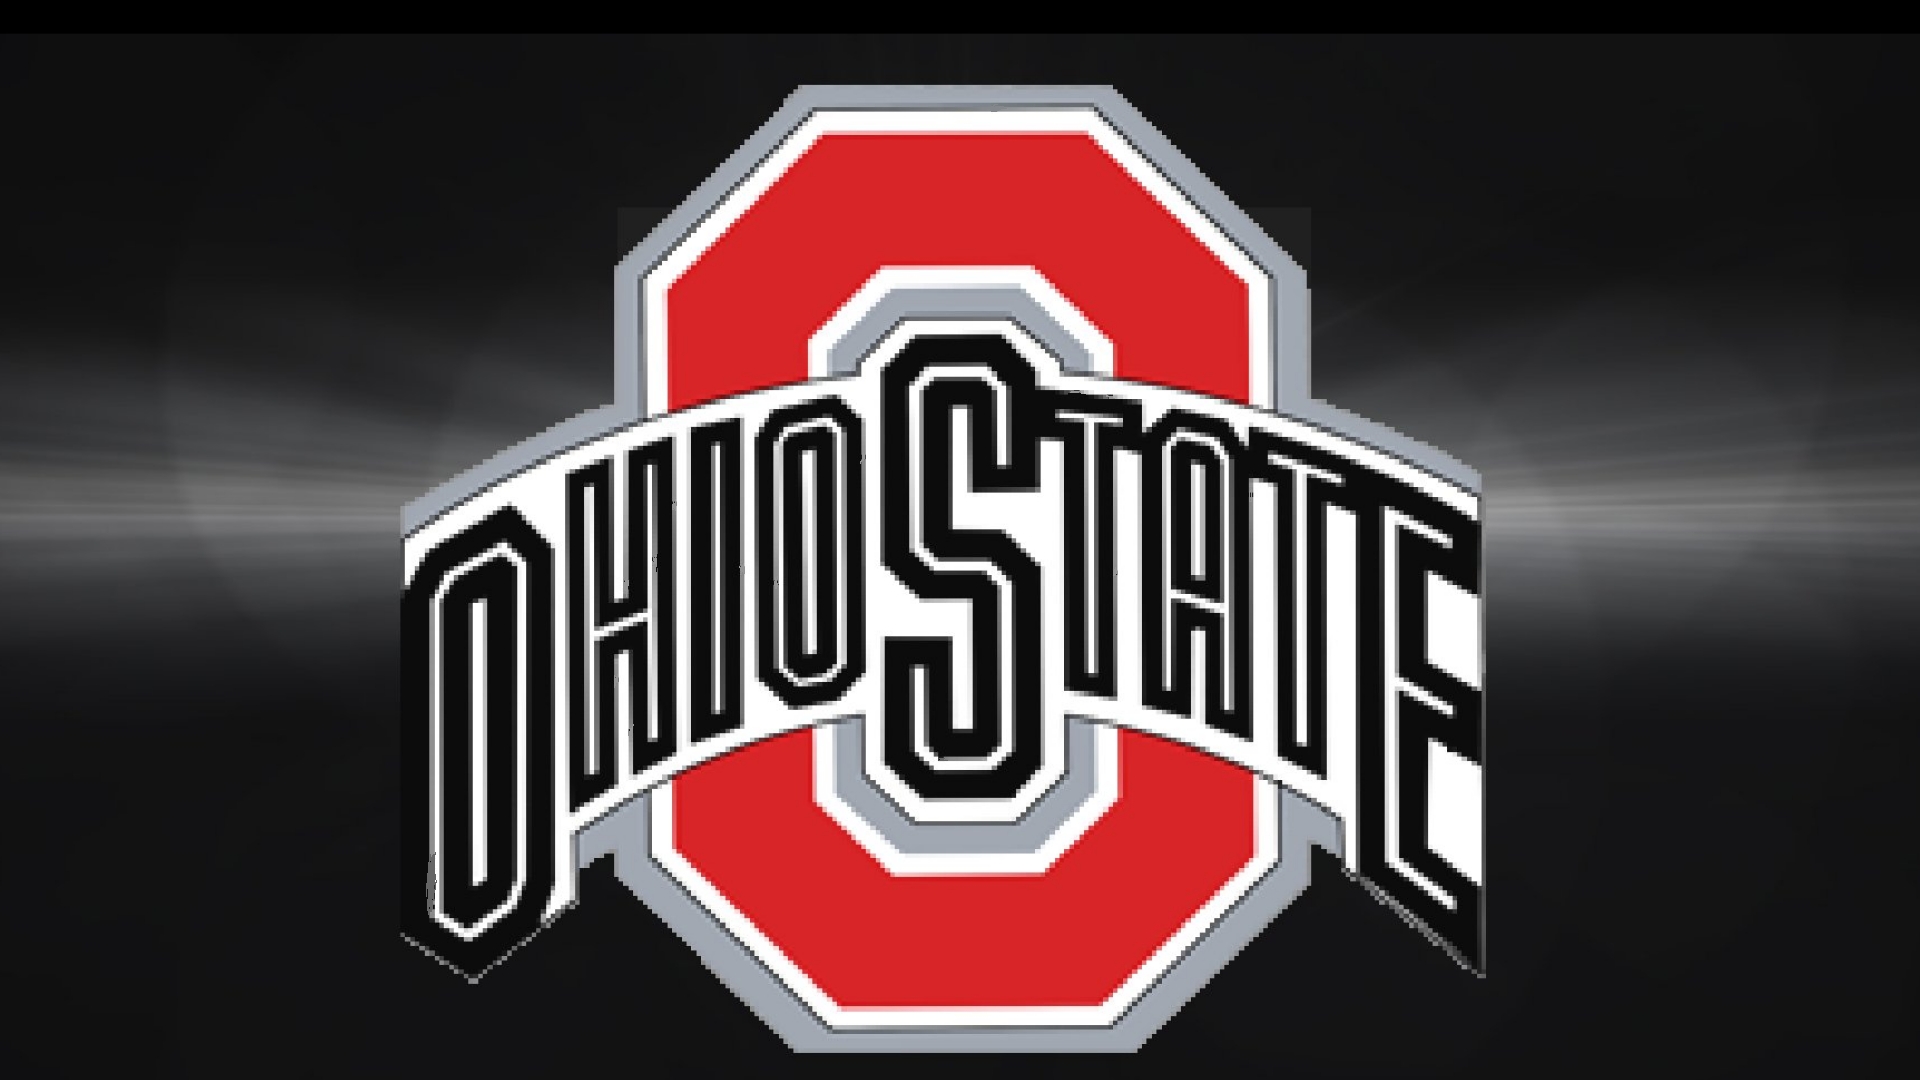 Ohio State Buckeyes. Ohio State logo. Ohio State Buckeyes logo. America Ohio State logo.